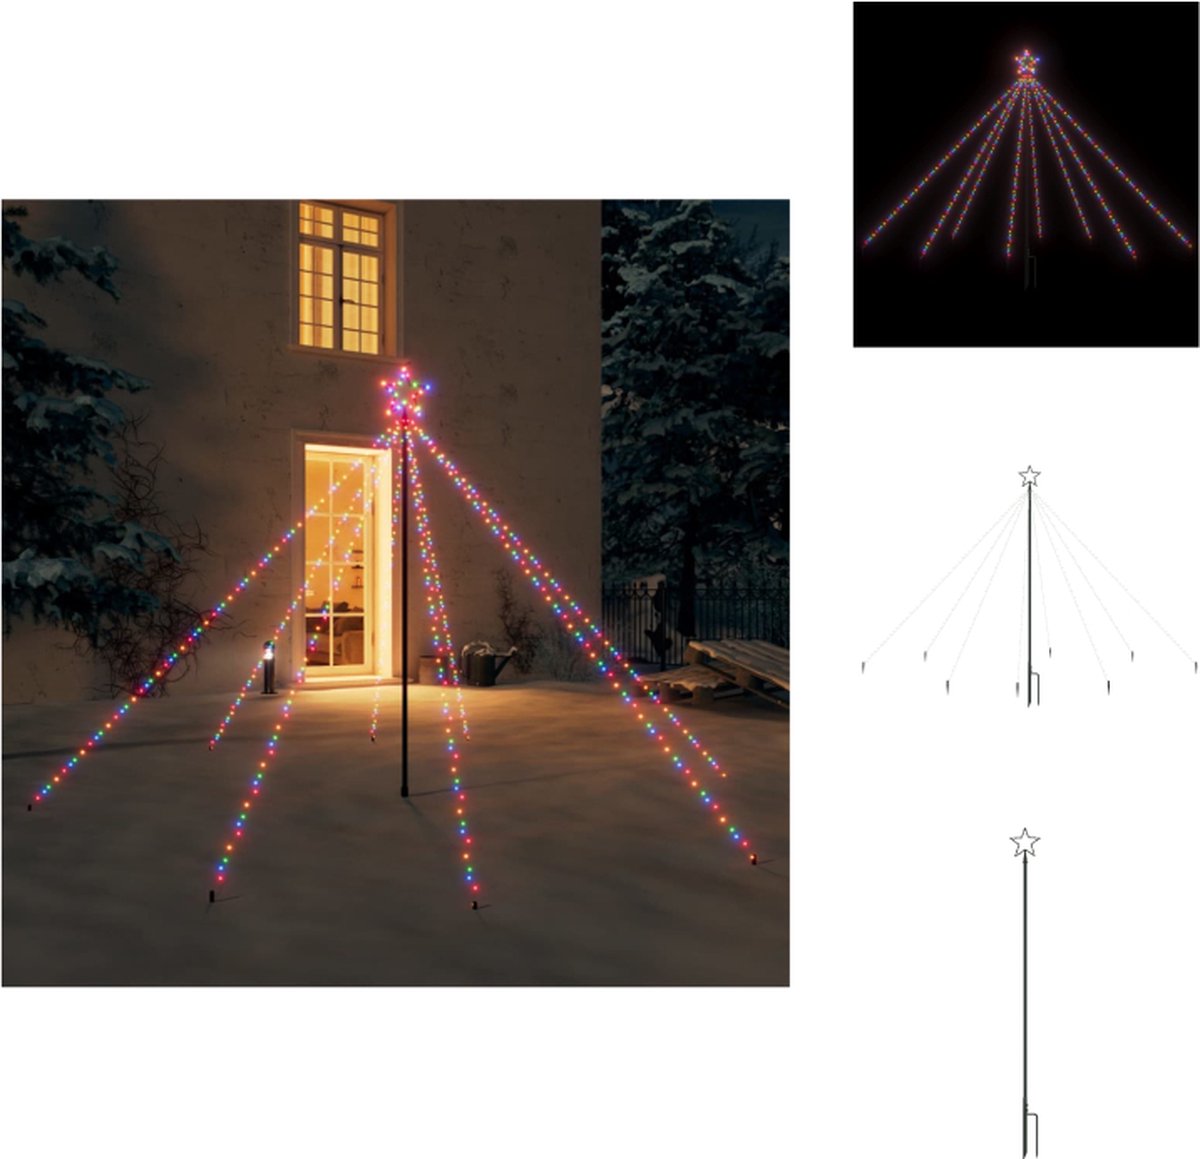 vidaXL Kerstboomverlichting - LED Watervalontwerp - 2.5m hoog - 400 LEDs - Meerkleurig - IP44 - 8 snoeren - Inclusief ster - Energiebesparend - Plug-in - 10m stroomsnoer - 4.5V - 3.6W - Montage vereist - Decoratieve kerstboom